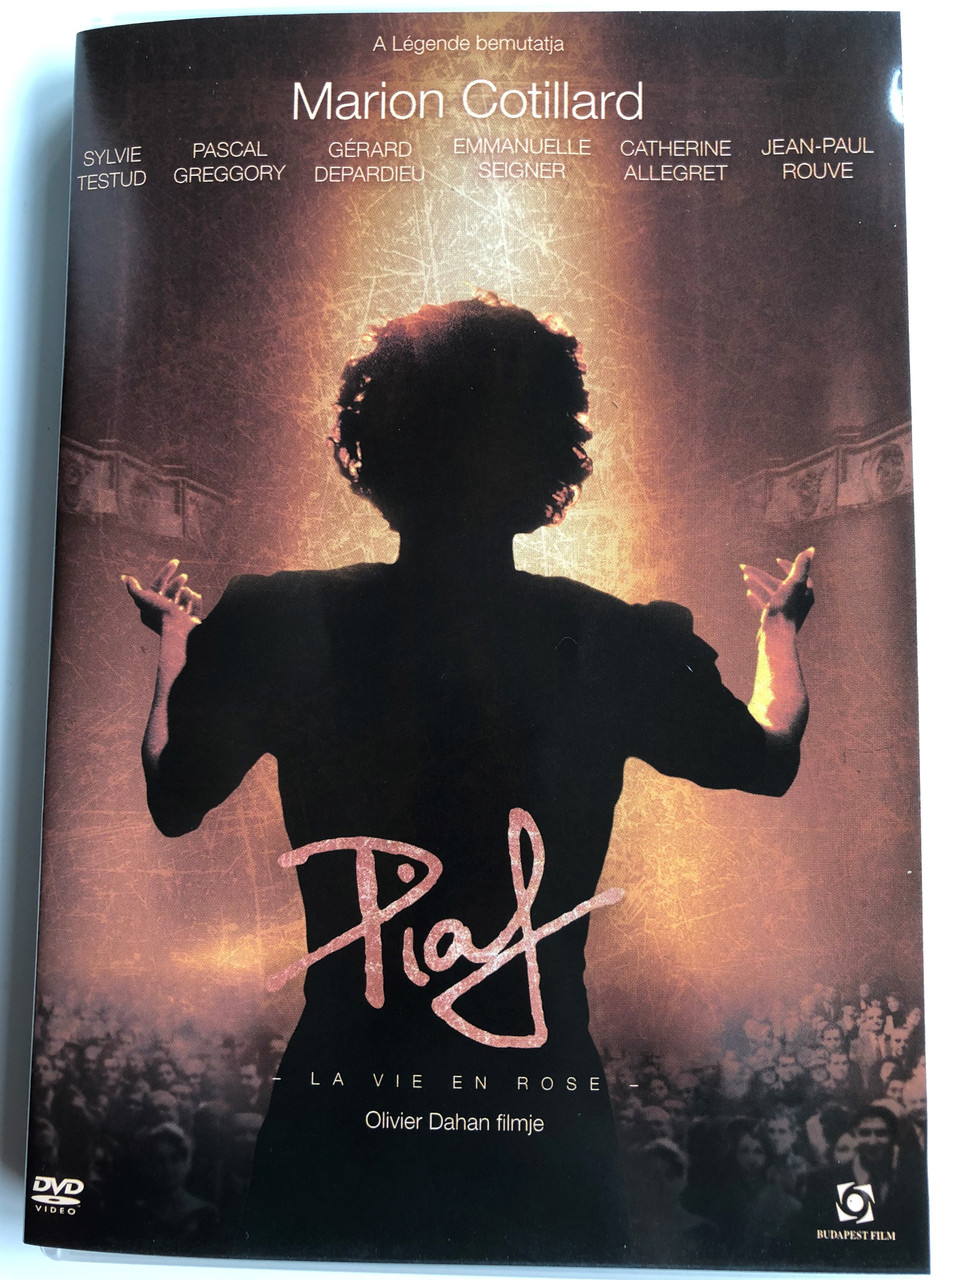 Piaf - La vie en Rose DVD 2007 La Mome / Directed by Olivier Dahan /  Starring: Marion Cotillard, Sylvie Testud, Pascal Greggory, Gérard  Depardieu - bibleinmylanguage